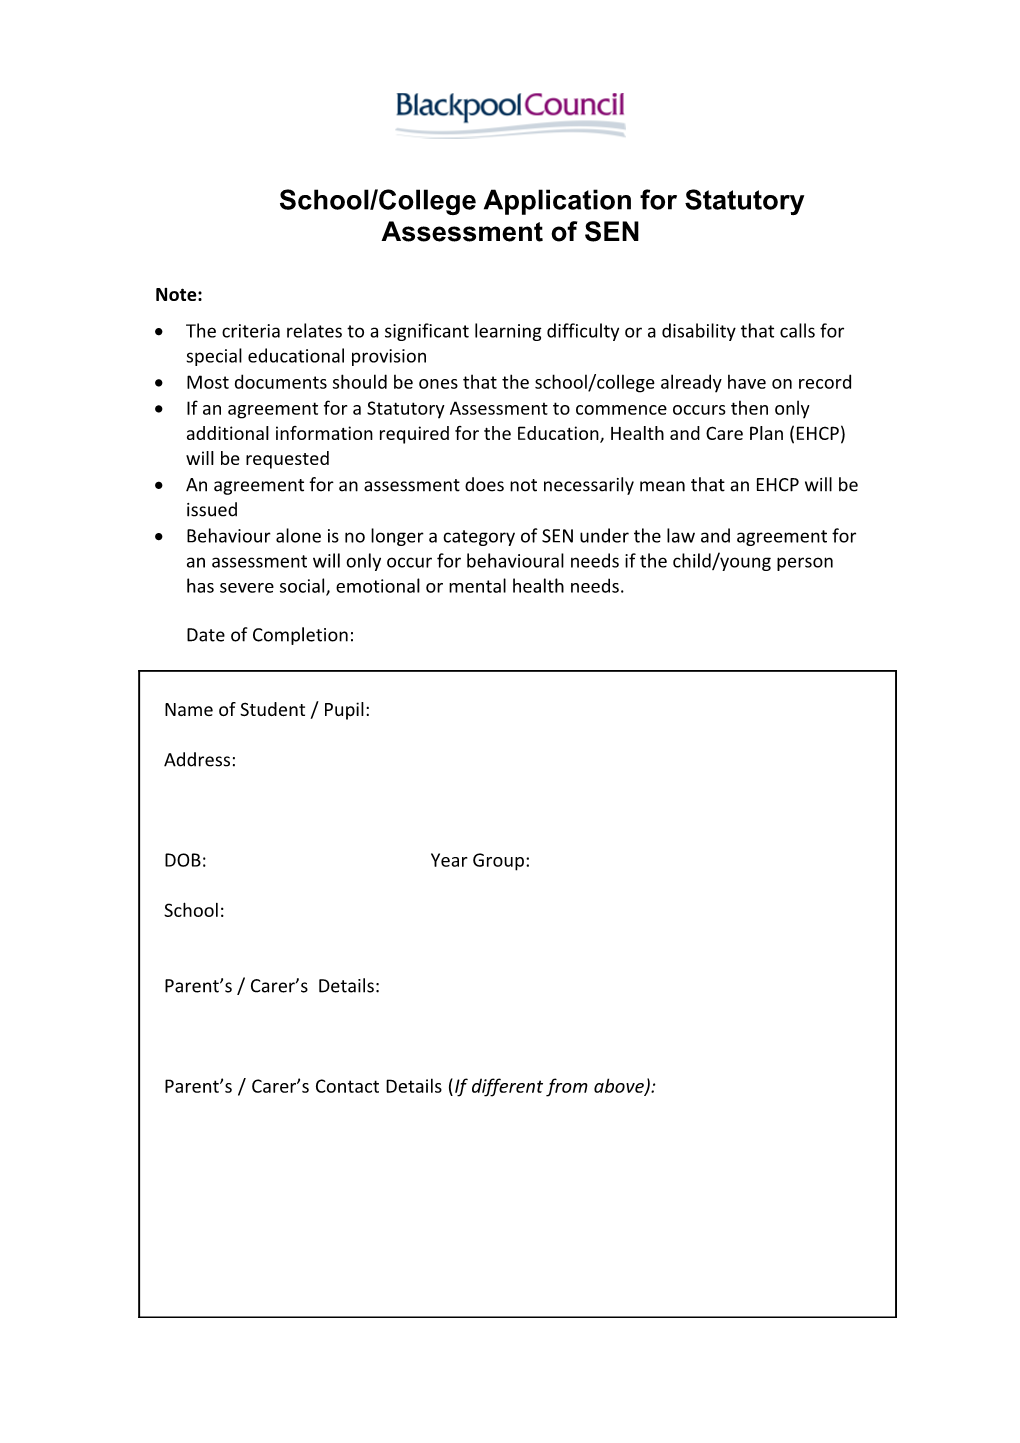 School/College Application for Statutory Assessment of SEN